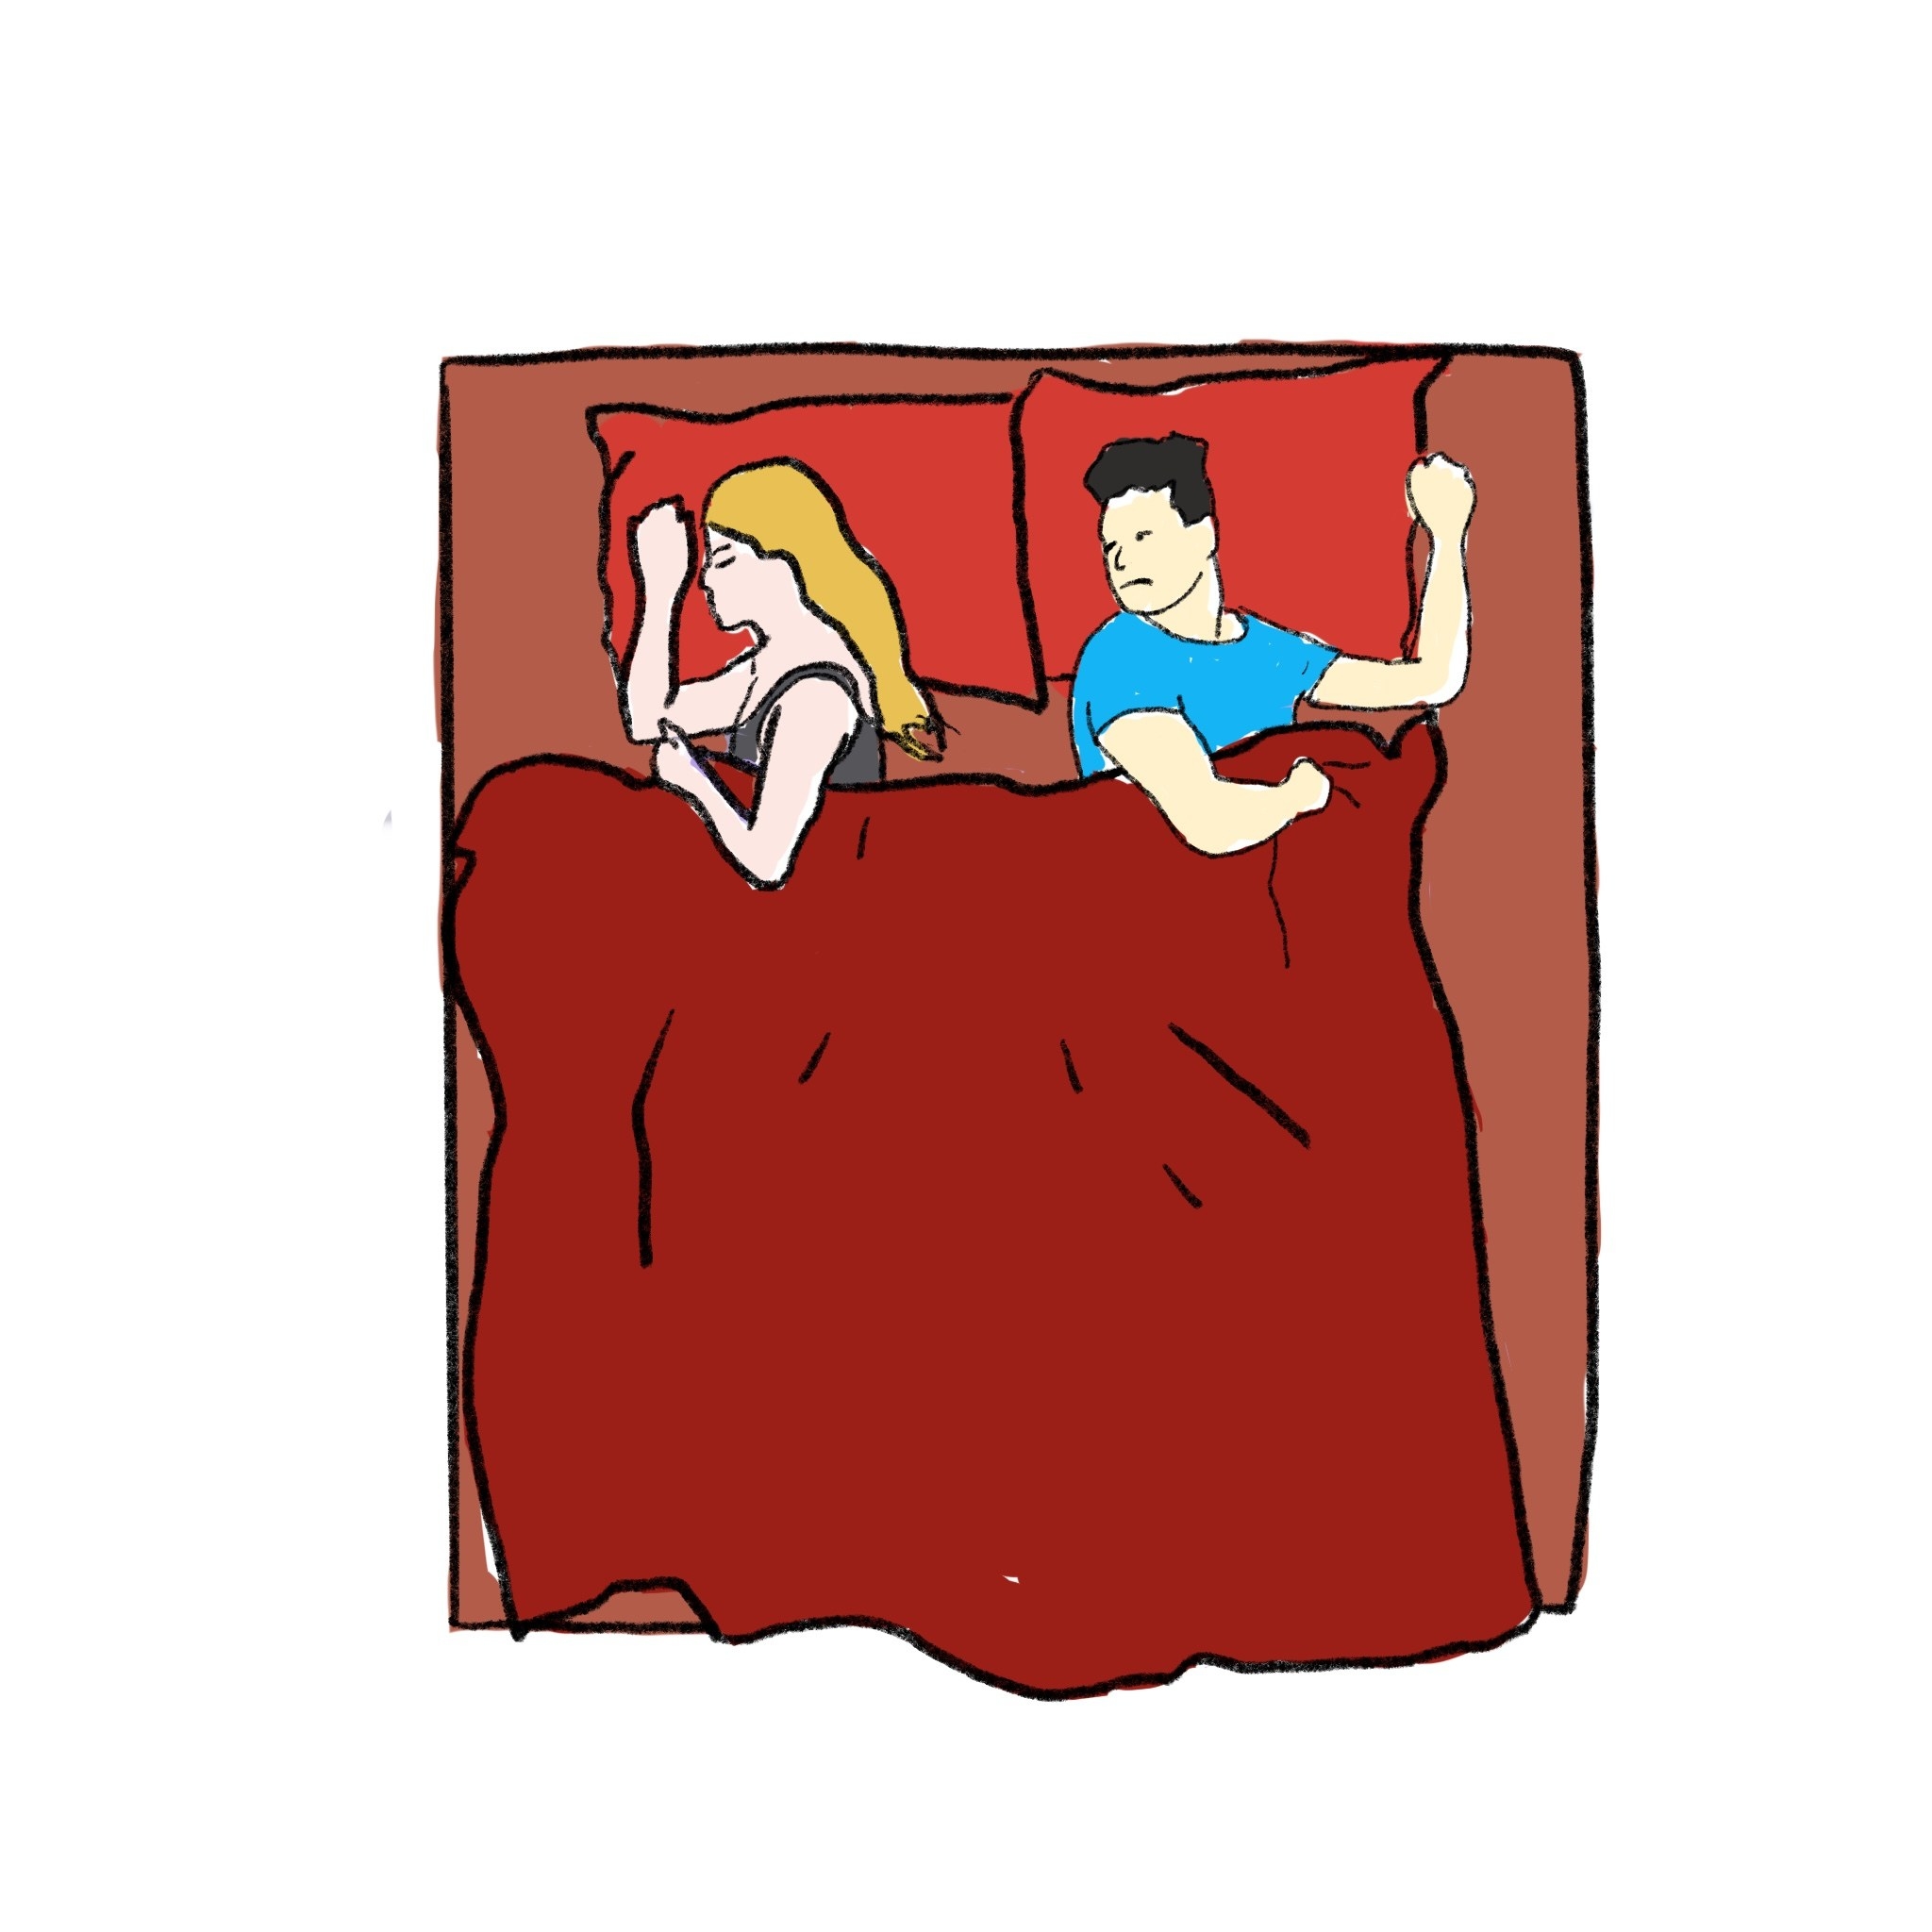 awake in bed next to partner